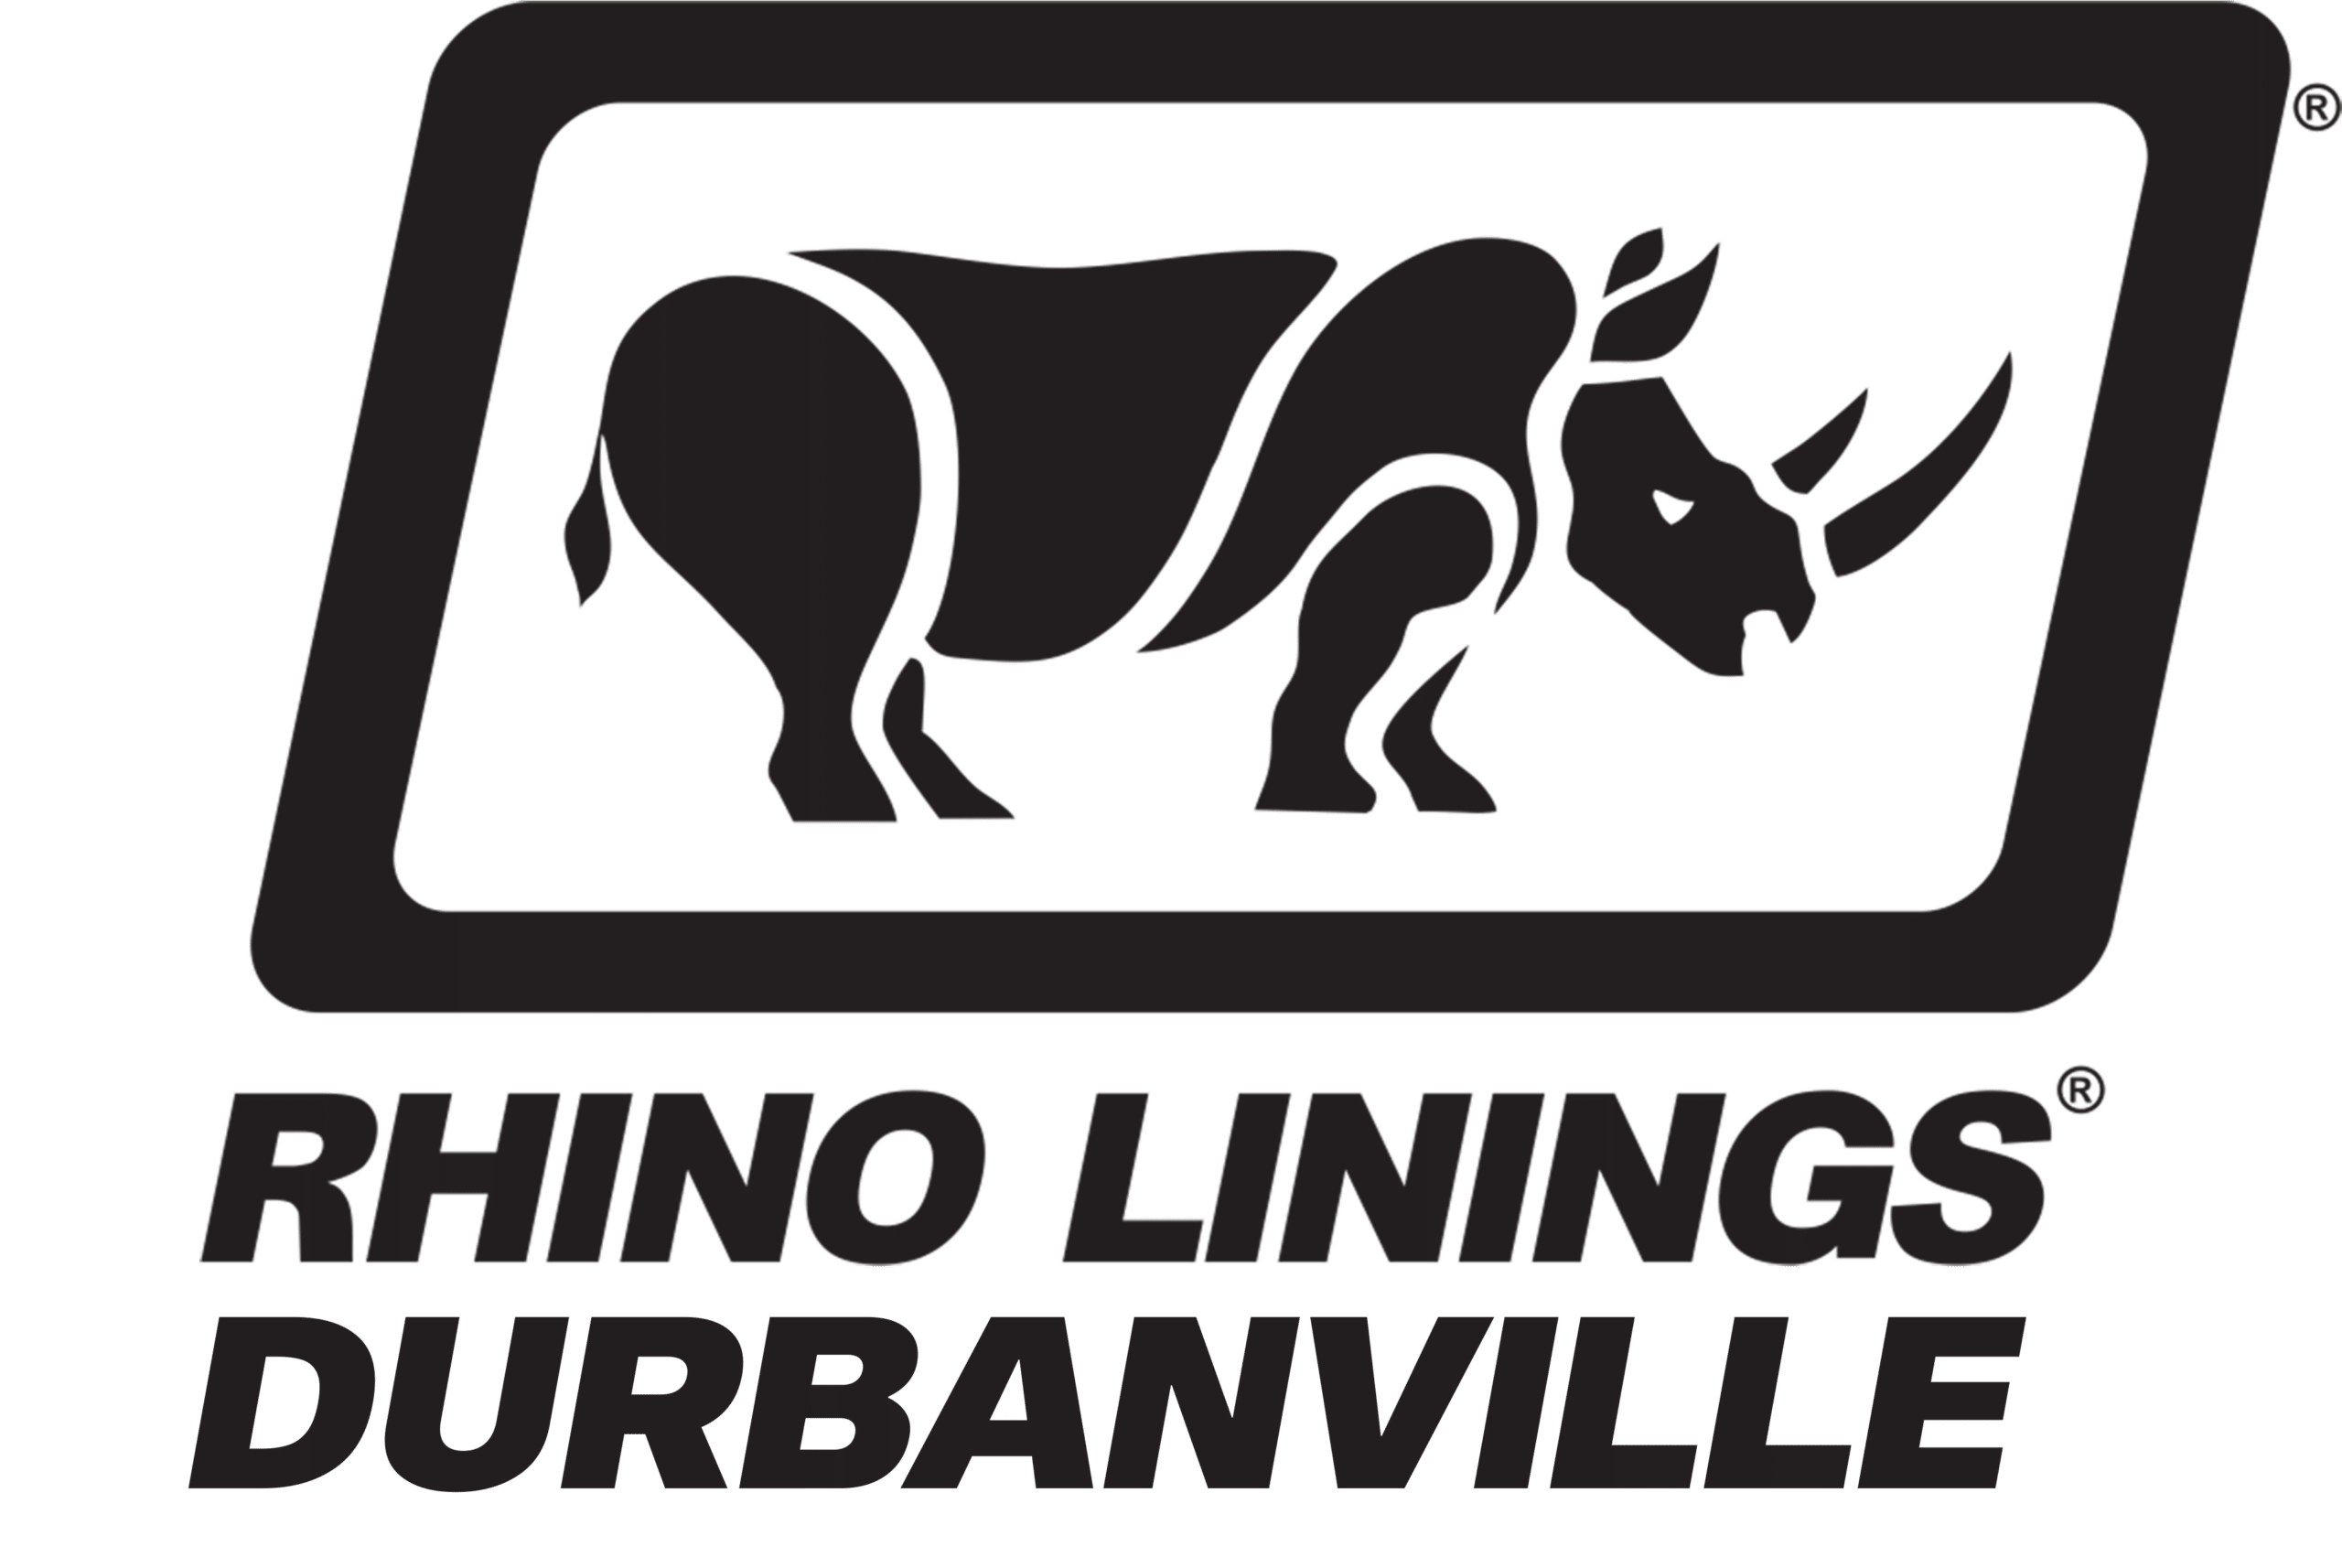 Rhino Logo Vector Hd Images, Rhino Logo Vector, Logo, Vector, Rhinoceros PNG  Image For Free Download | Animal logo, Pet logo design, Rhino logo